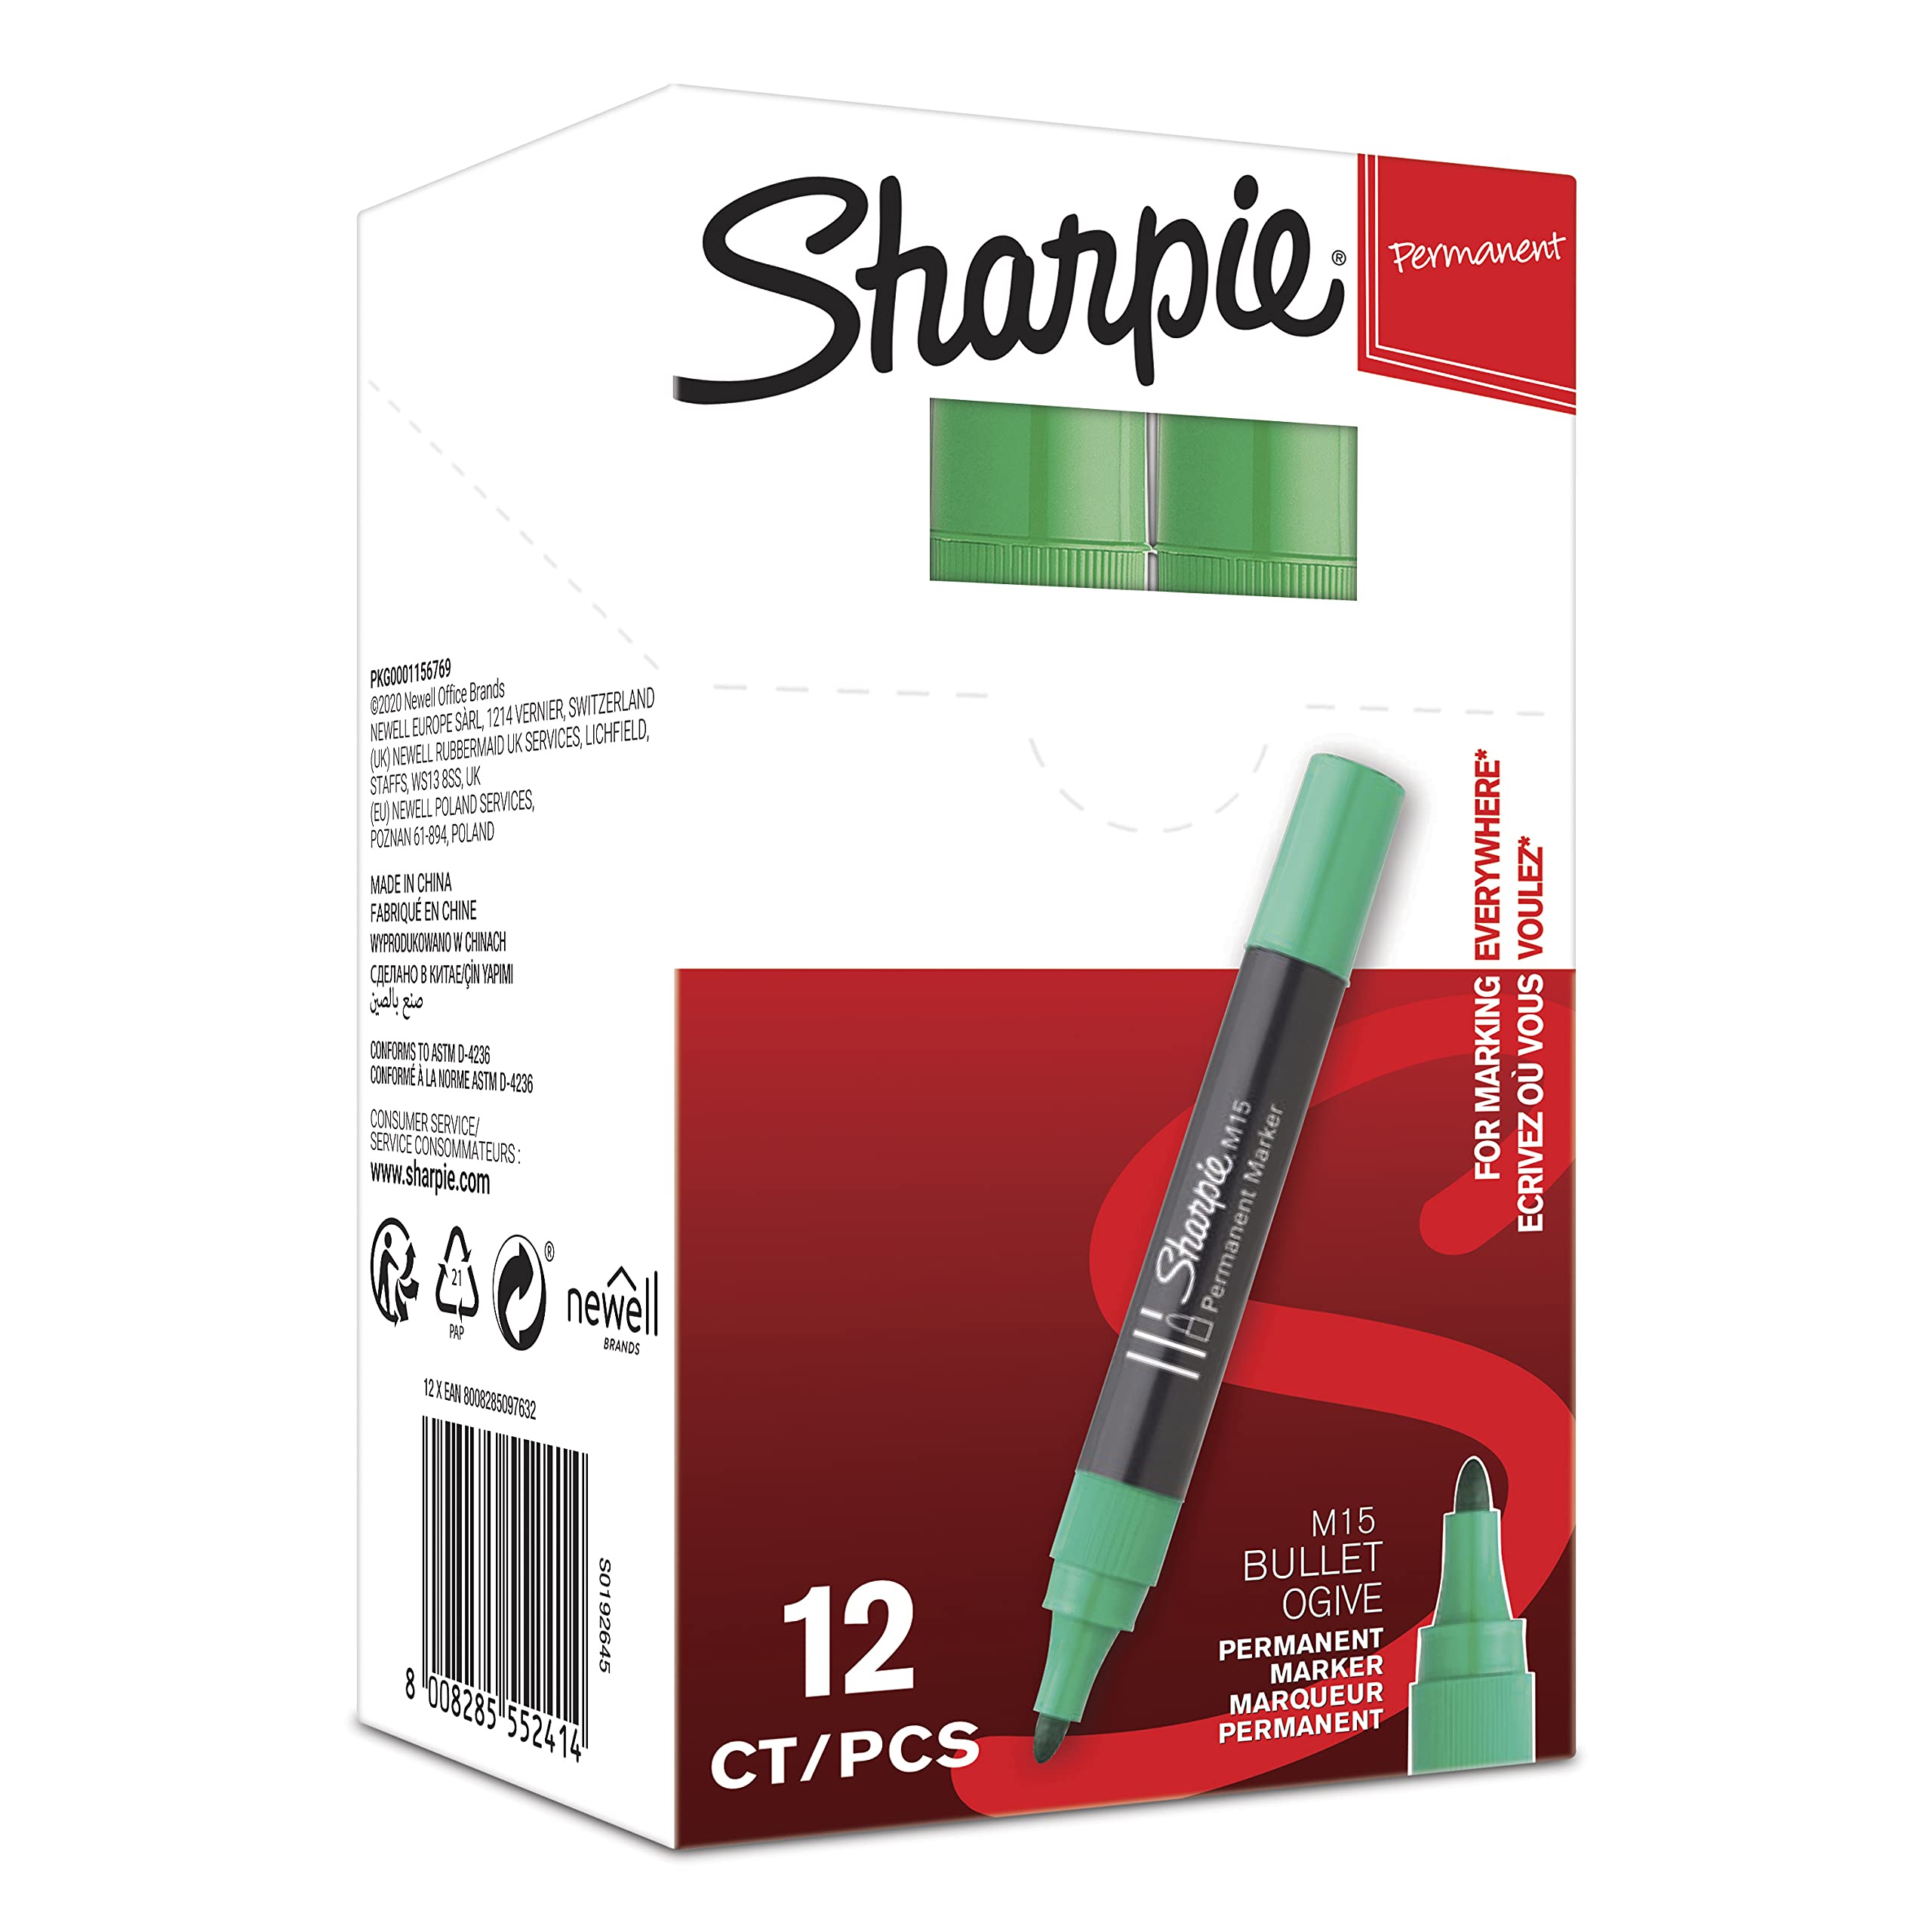 Sharpie S0192645 M15 Permanent Marker, Patronenspitze, 12er-Box, grün